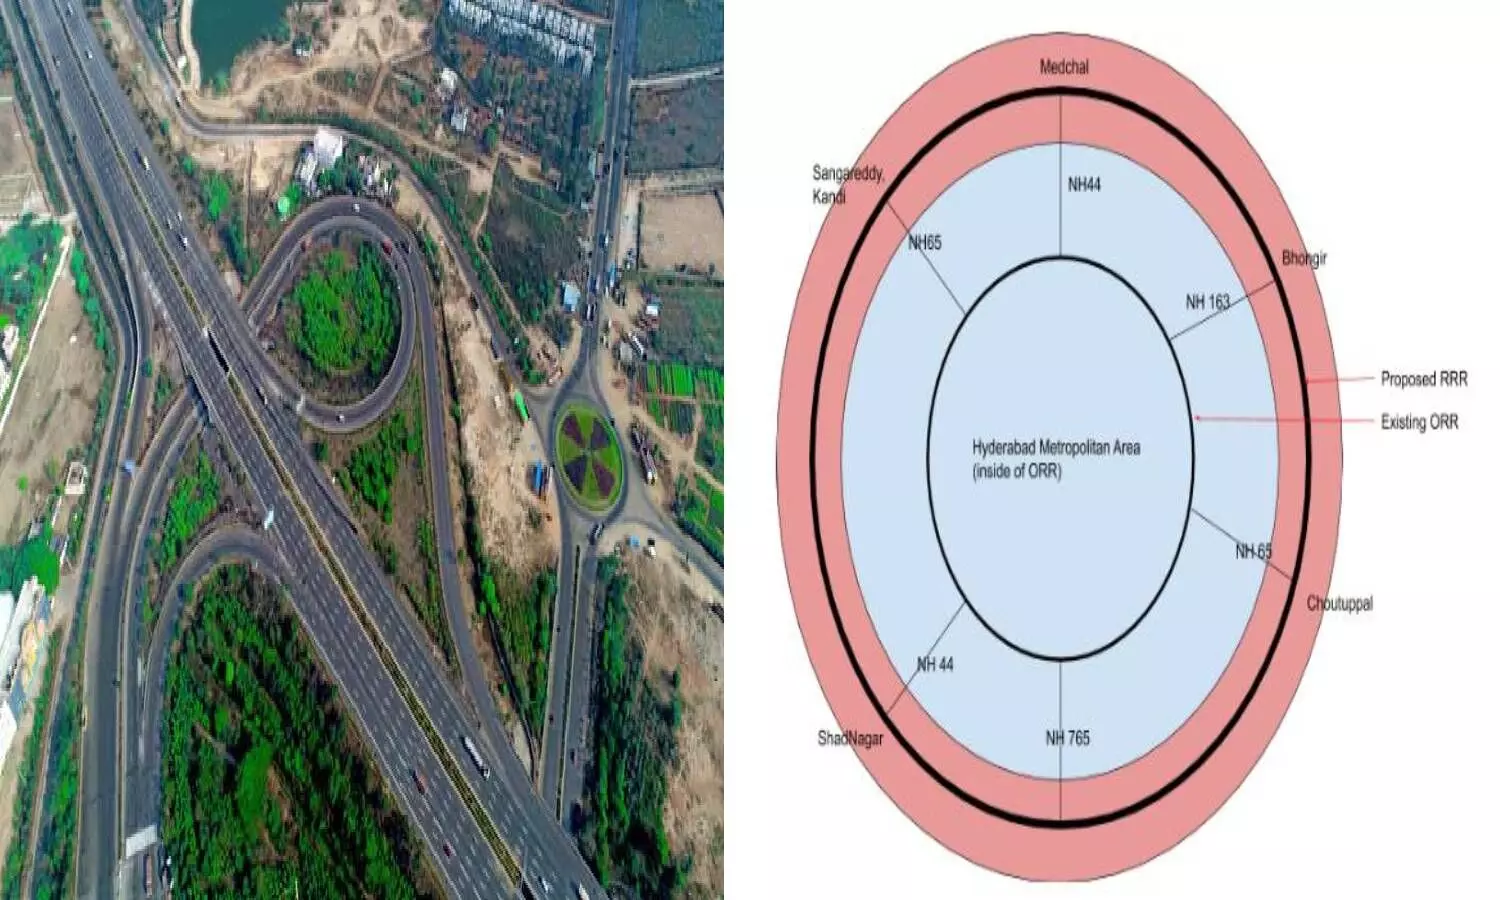 Regional Ring Road vs Suburban Rail Corridors